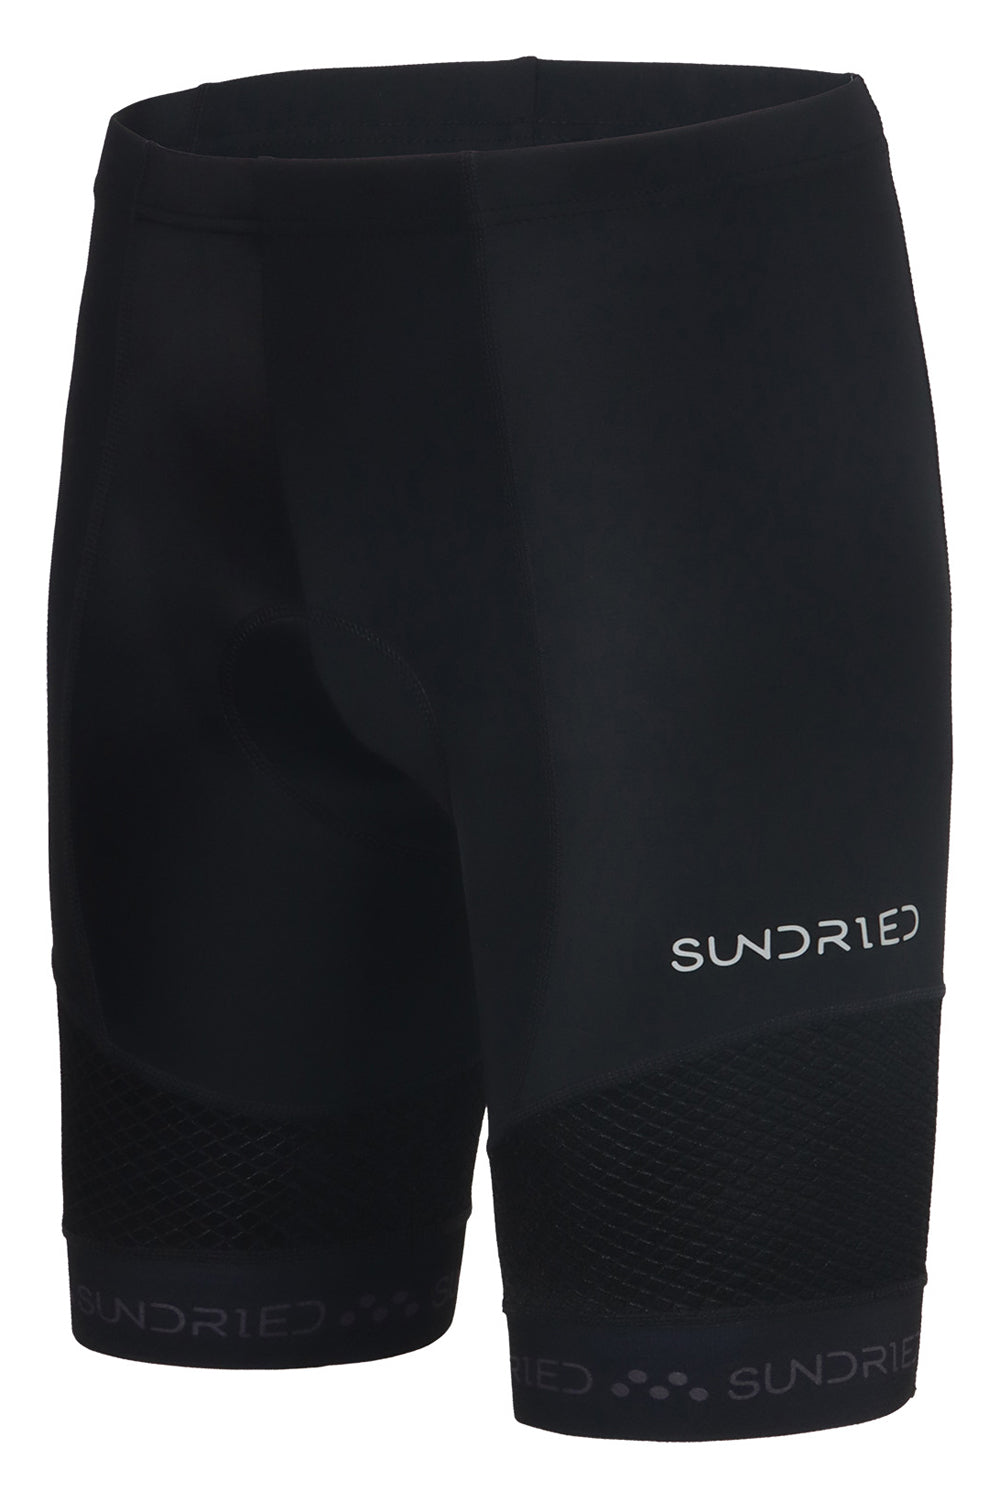 Sundried Men's Padded Training Shorts